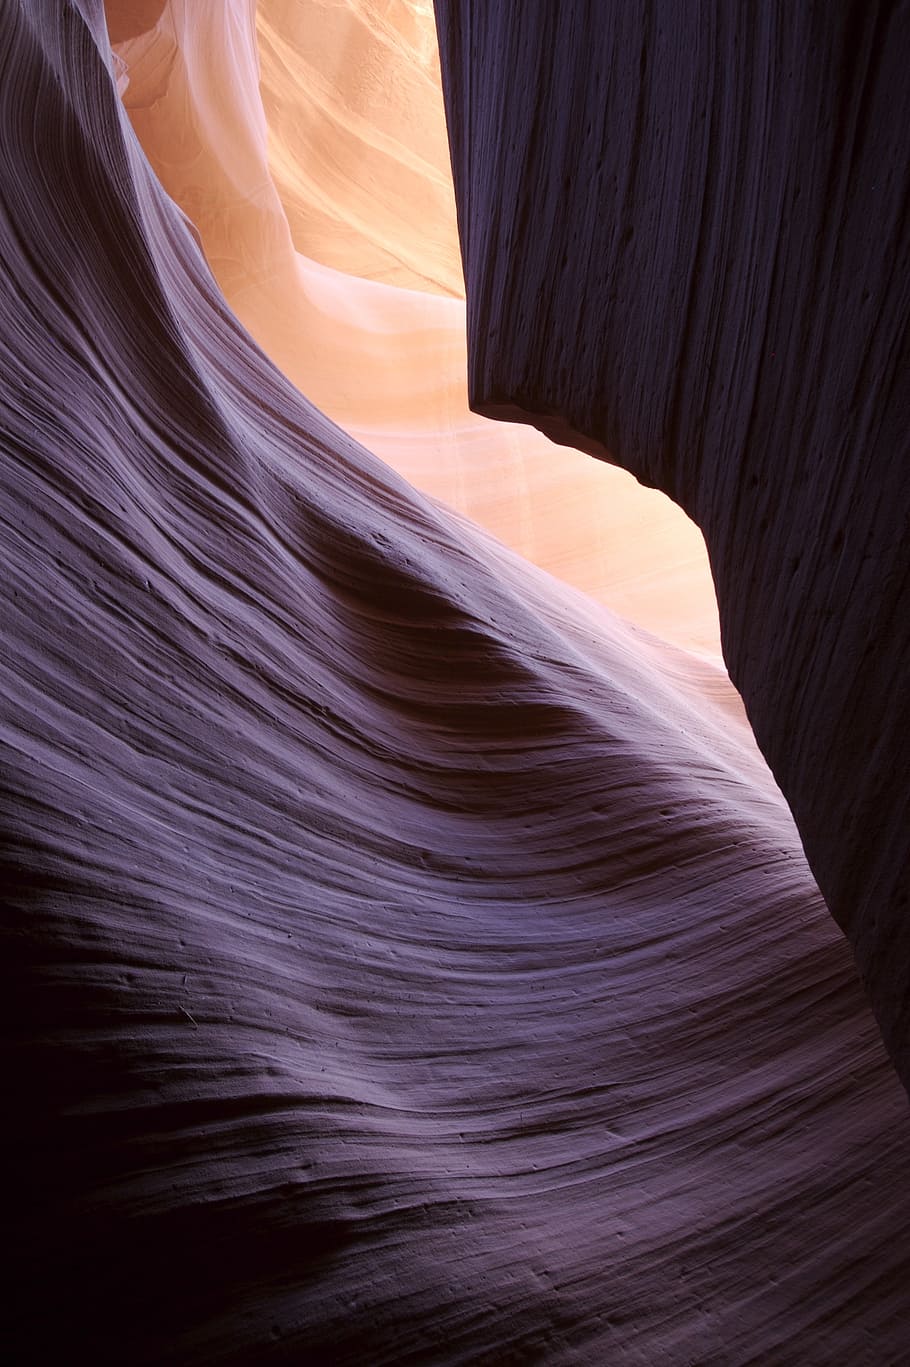 slot canyon, antelope canyon, sandstone, rock, erosion, desert, geology, southwest, landscape, rock - object